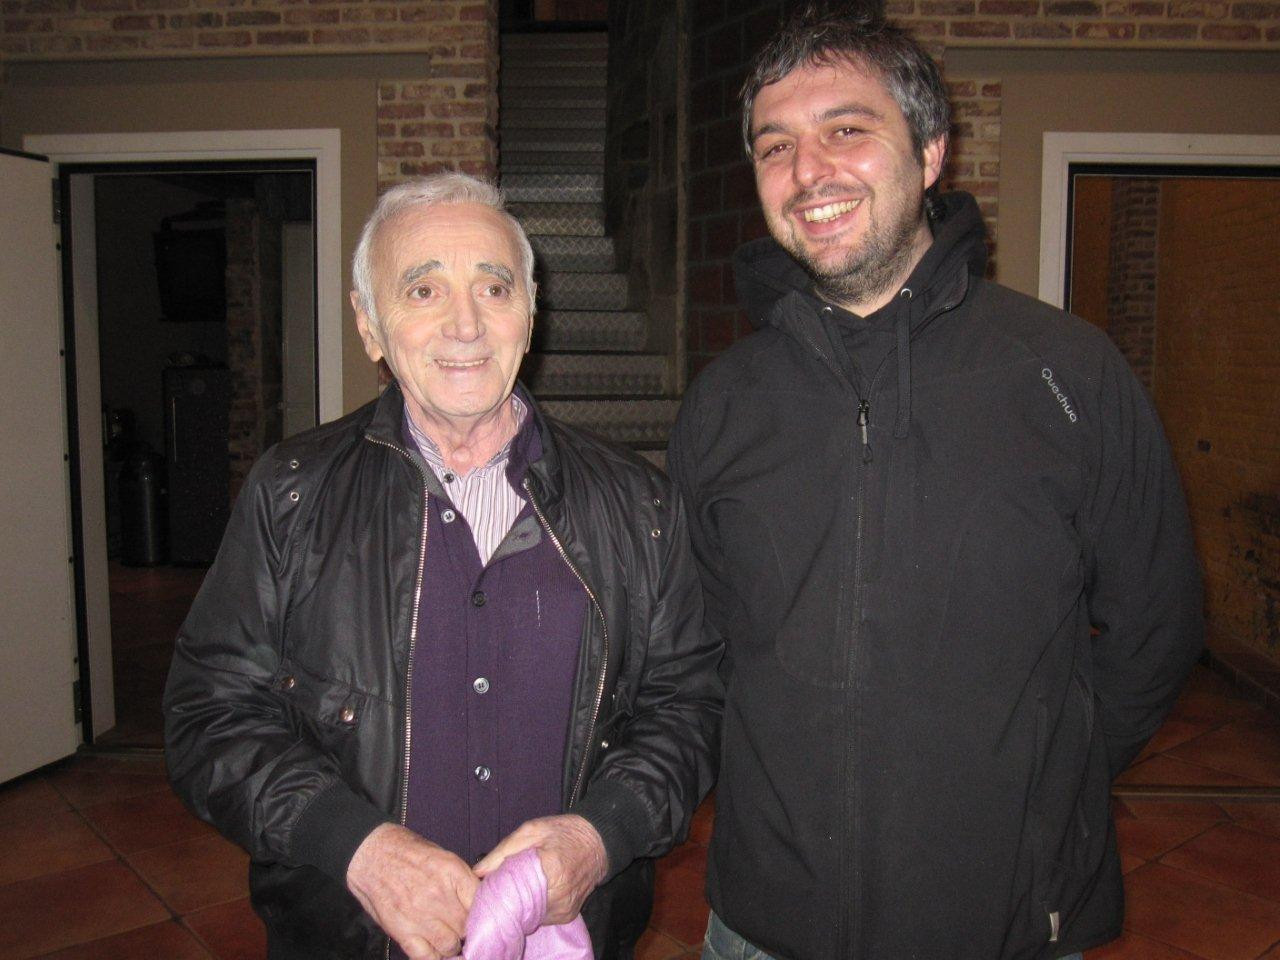 Шарль Азнавур (Charles Aznavour)